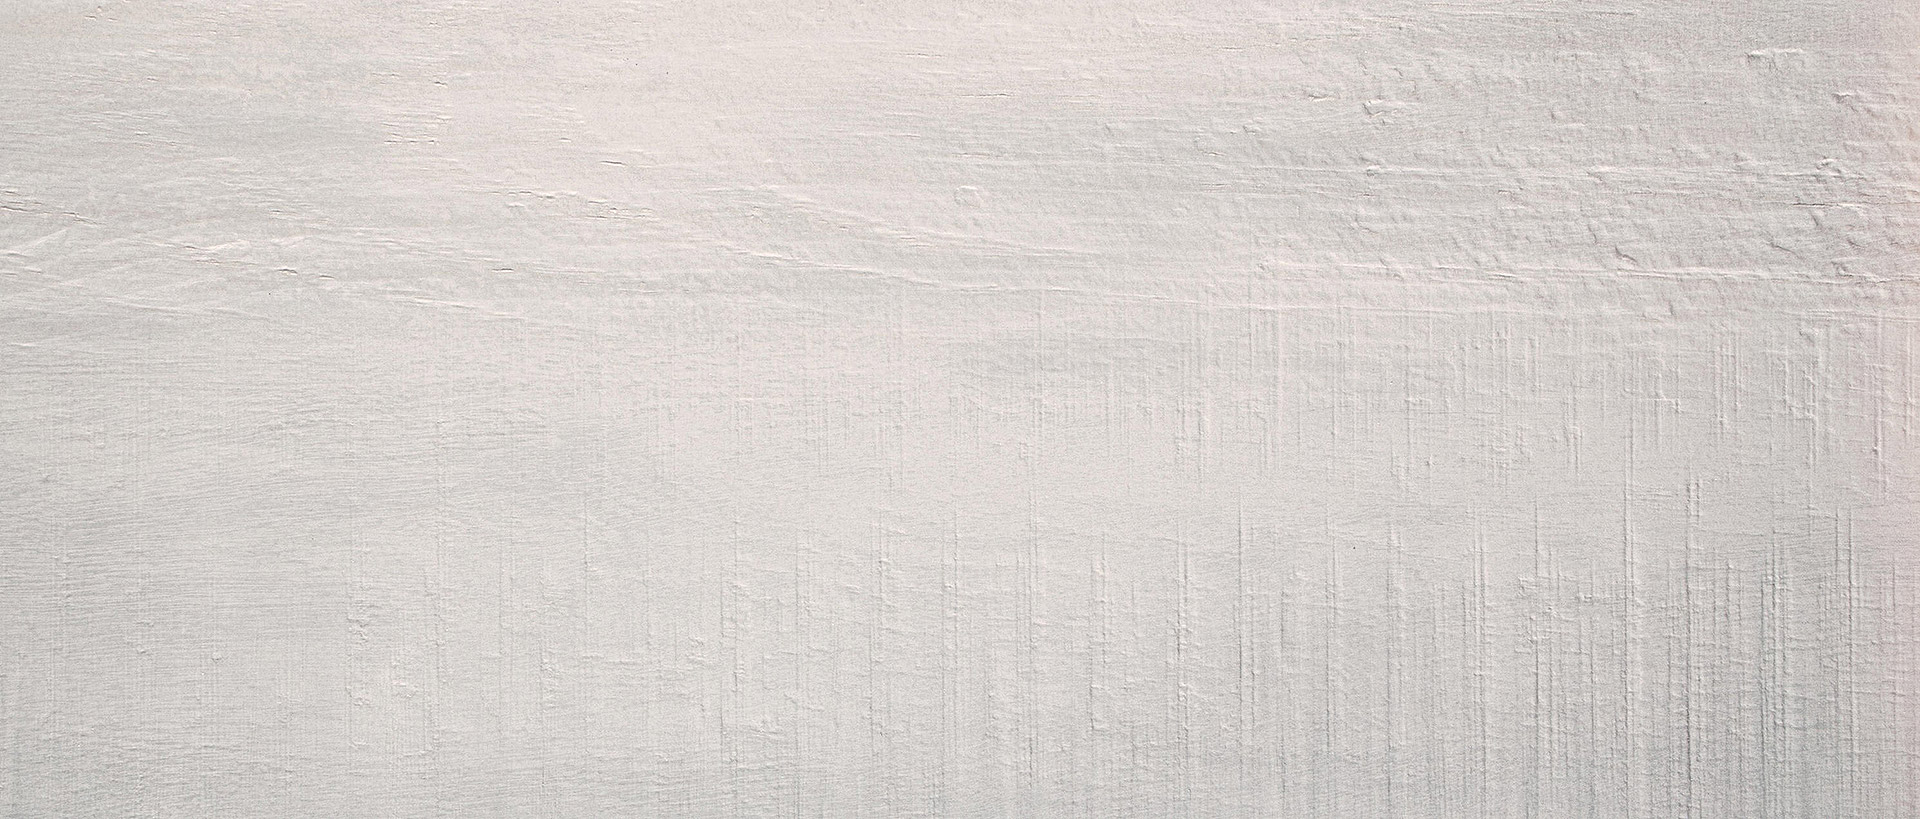 BETWOOD WHITE White Wood tile   15 x 90 cm